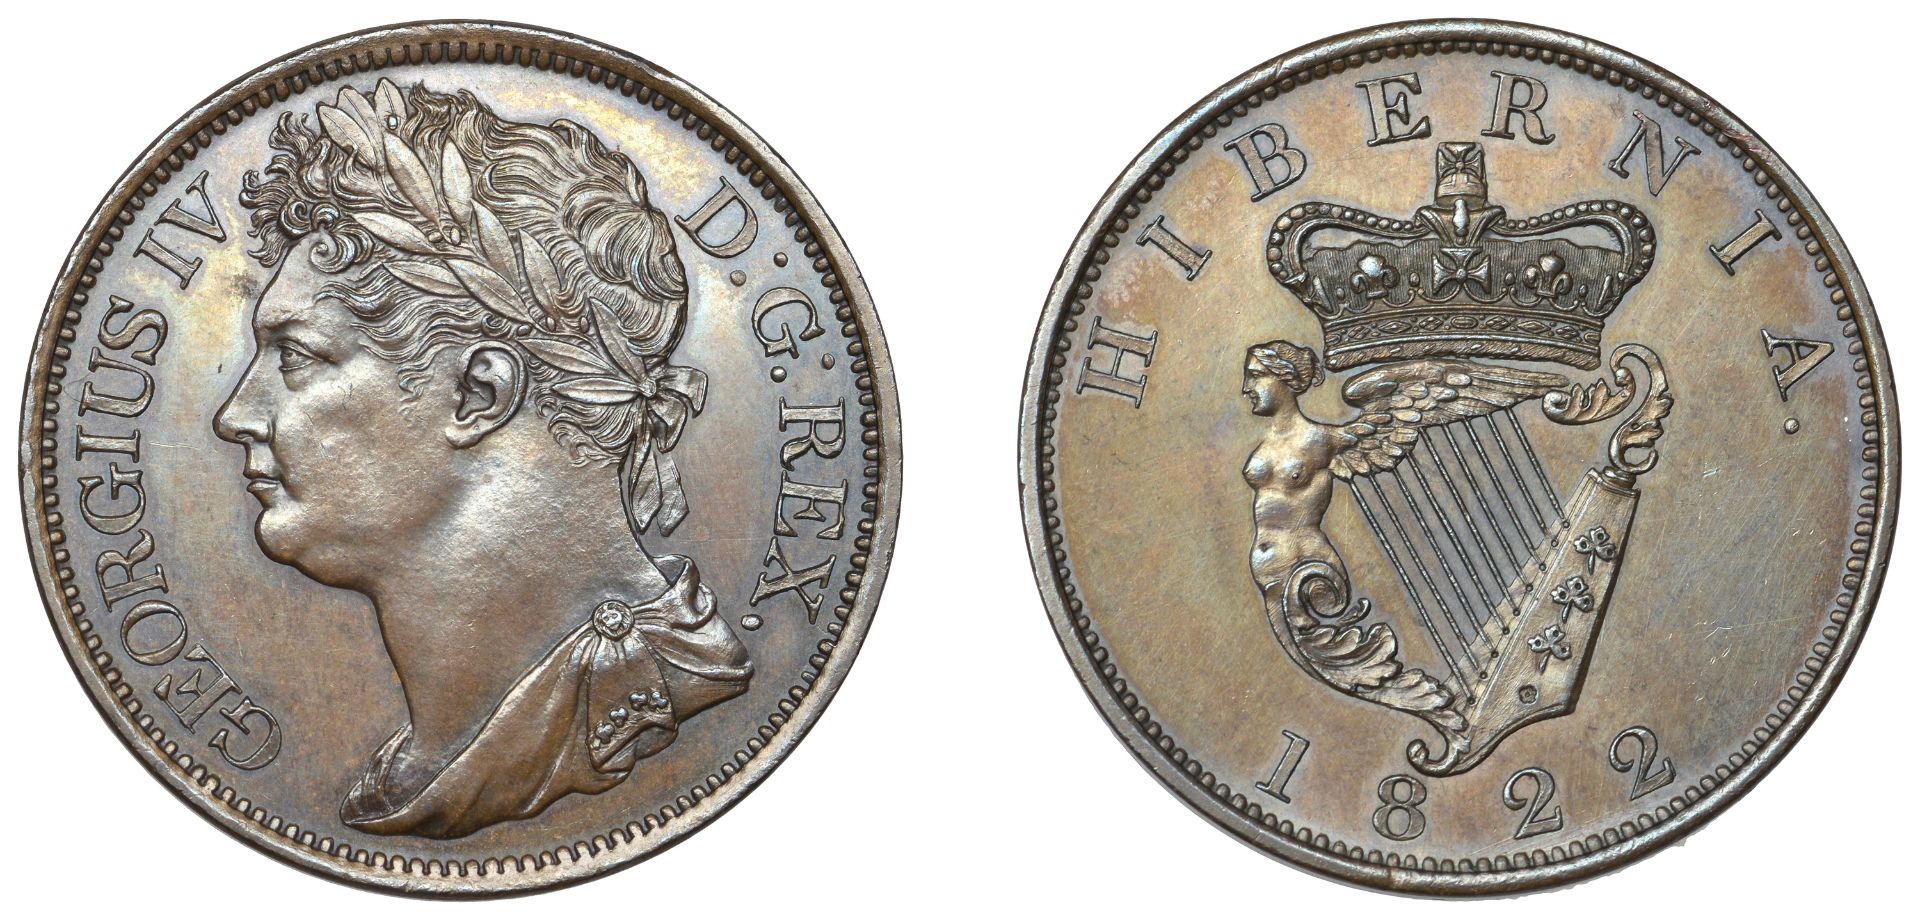 George IV (1820-1830), Specimen Penny, 1822, edge plain, 17.40g/6h (S 6623). Struck on a pol...